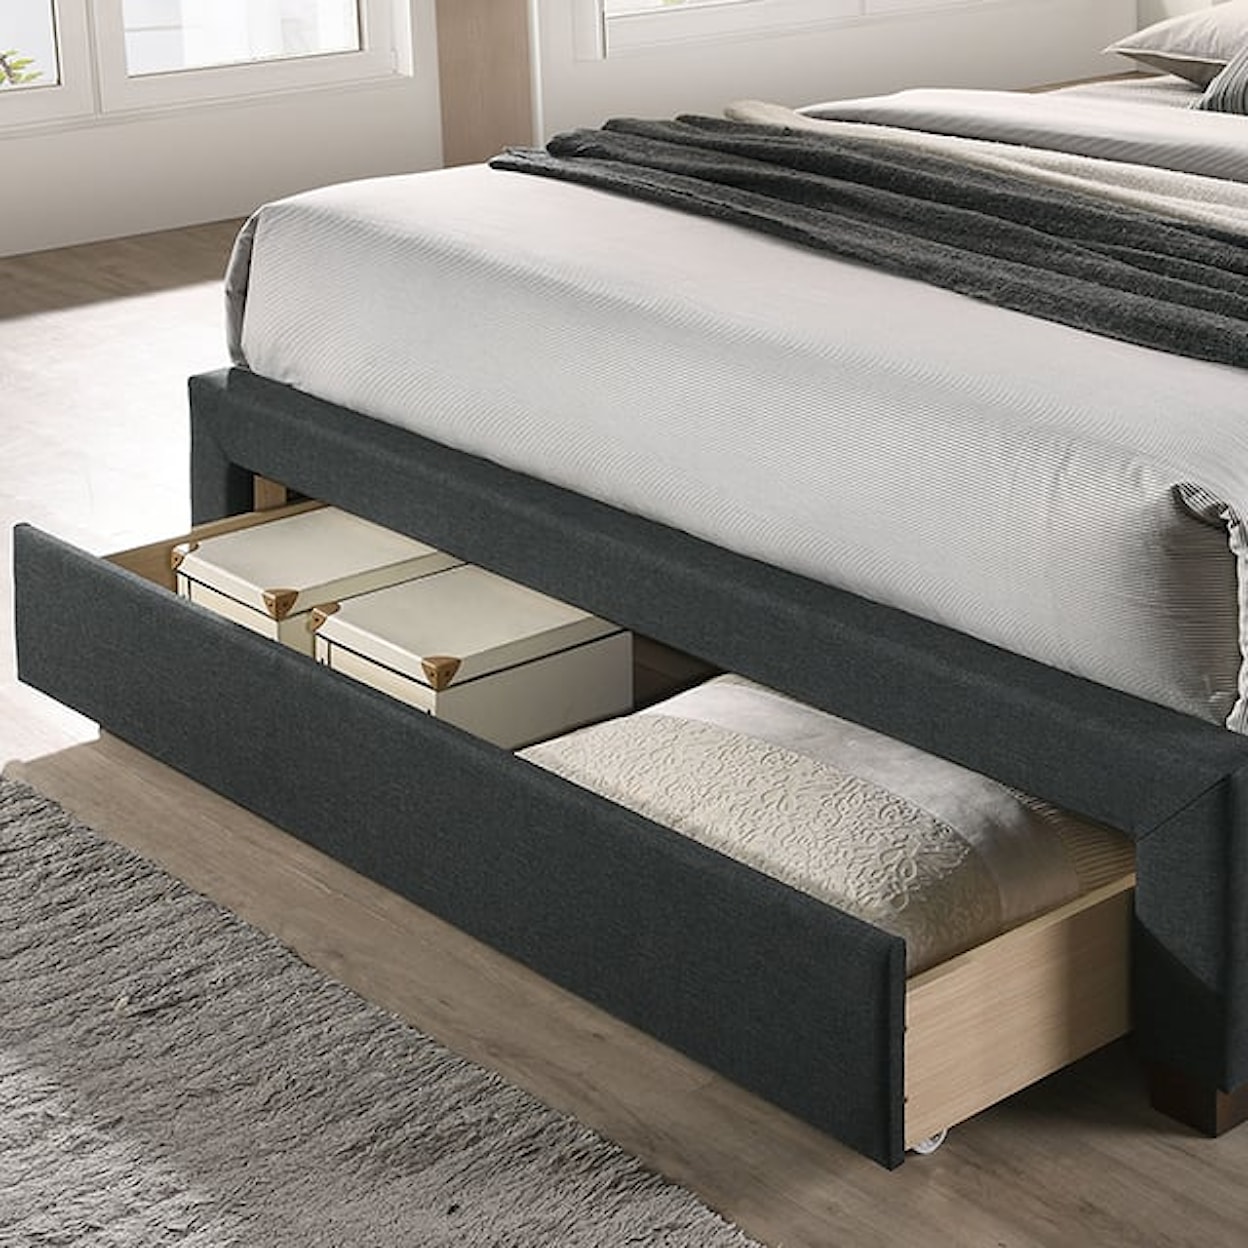 Furniture of America Sybella Full Storage Bed